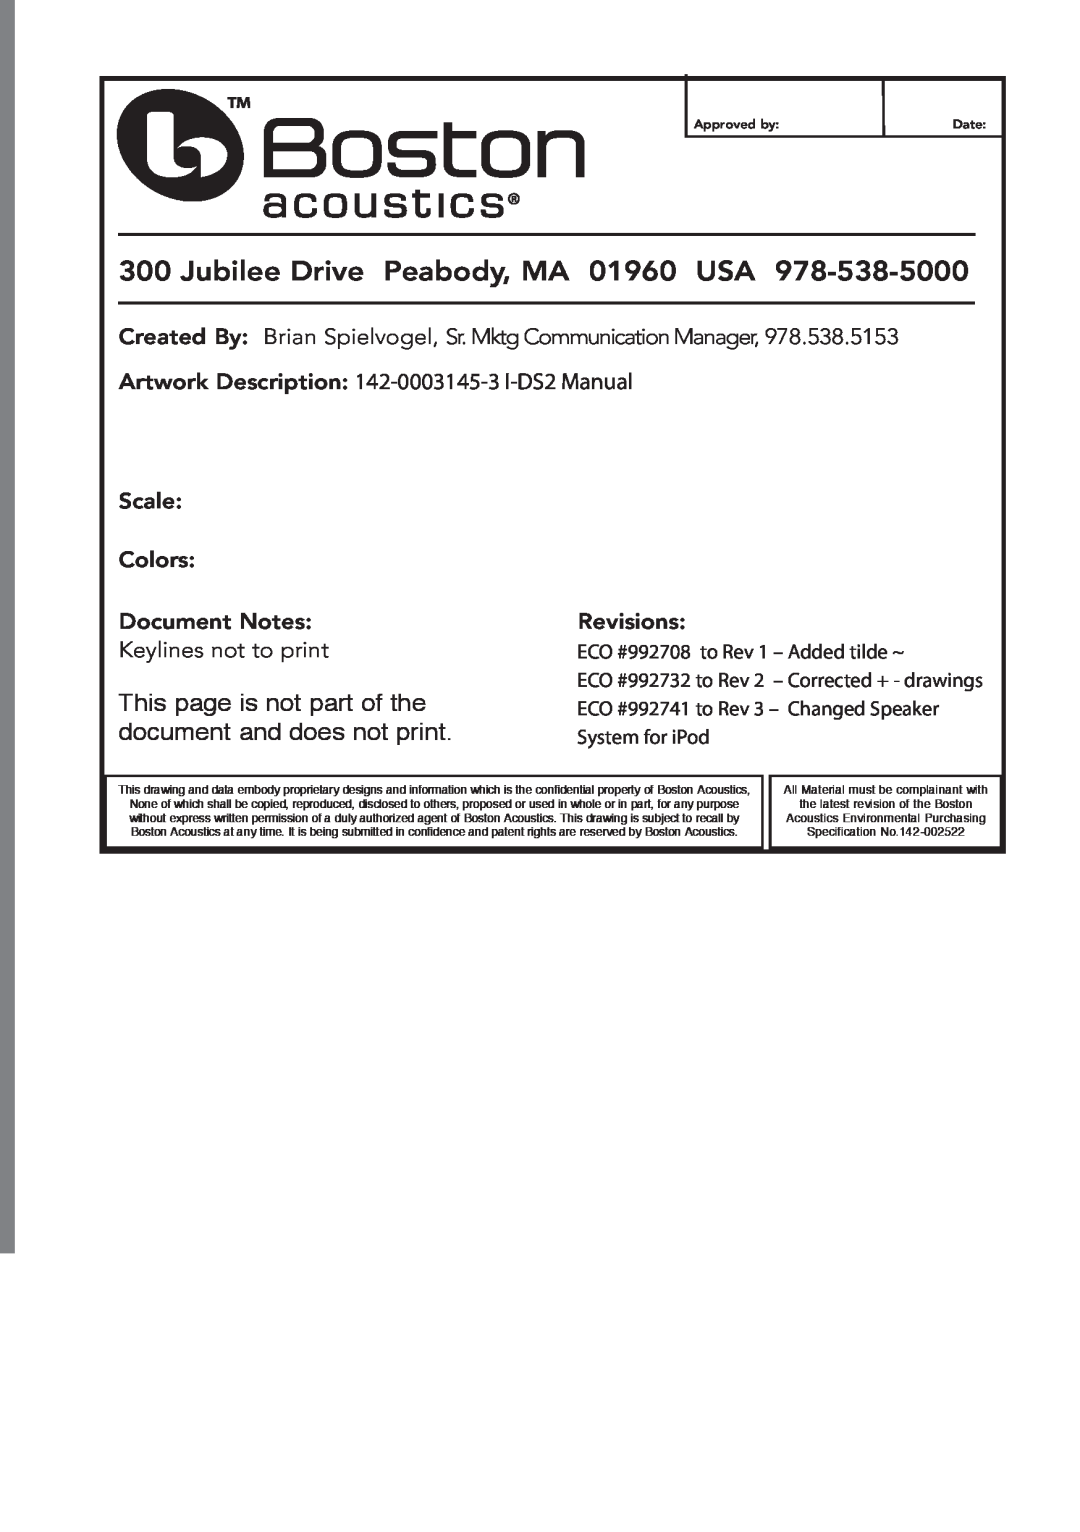 Boston Acoustics Horizon i-DS2 Jubilee Drive Peabody, MA 01960 USA, Artwork Description 142-0003145-3 I-DS2Manual 